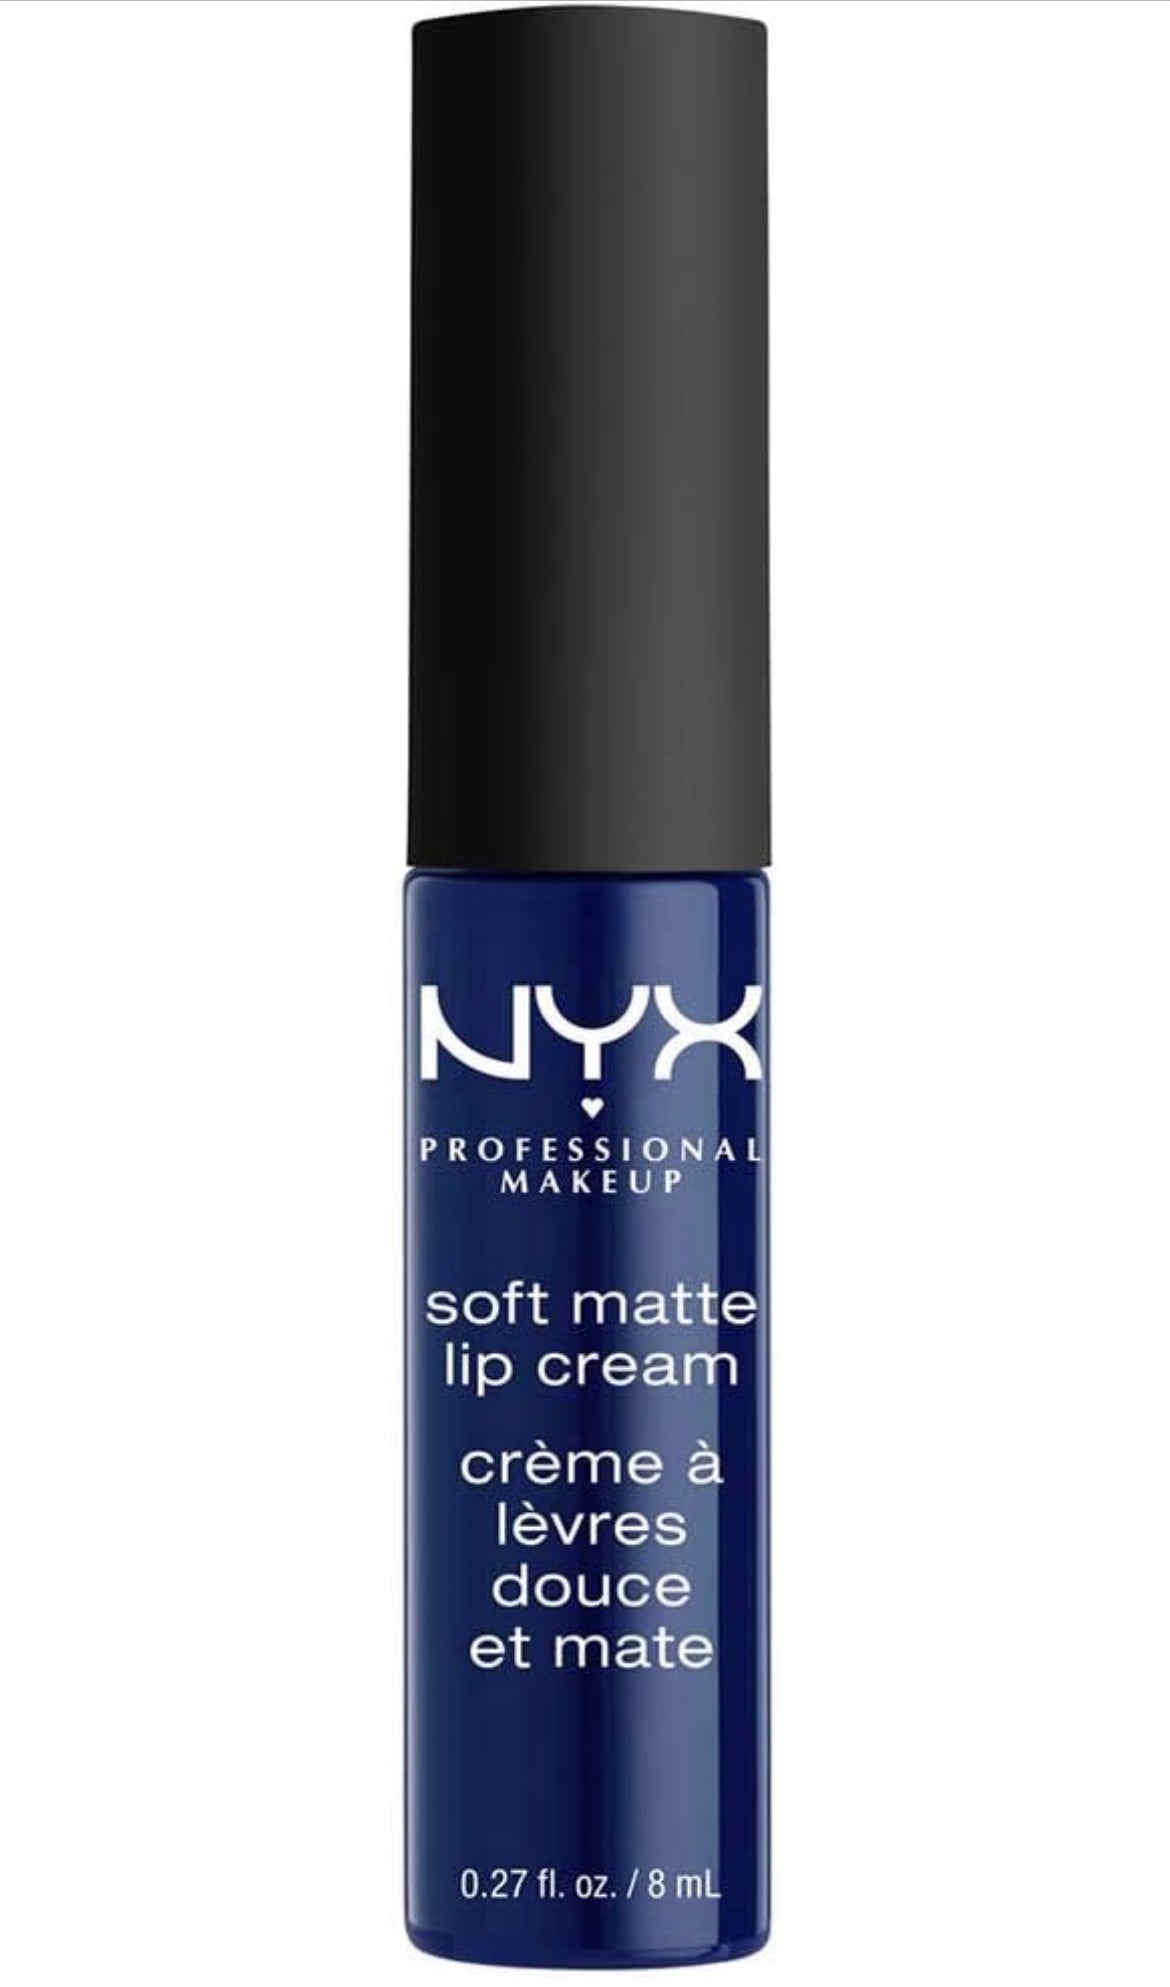 NYX Professional Makeup Soft Matte Lip Cream Moscow 0.27oz